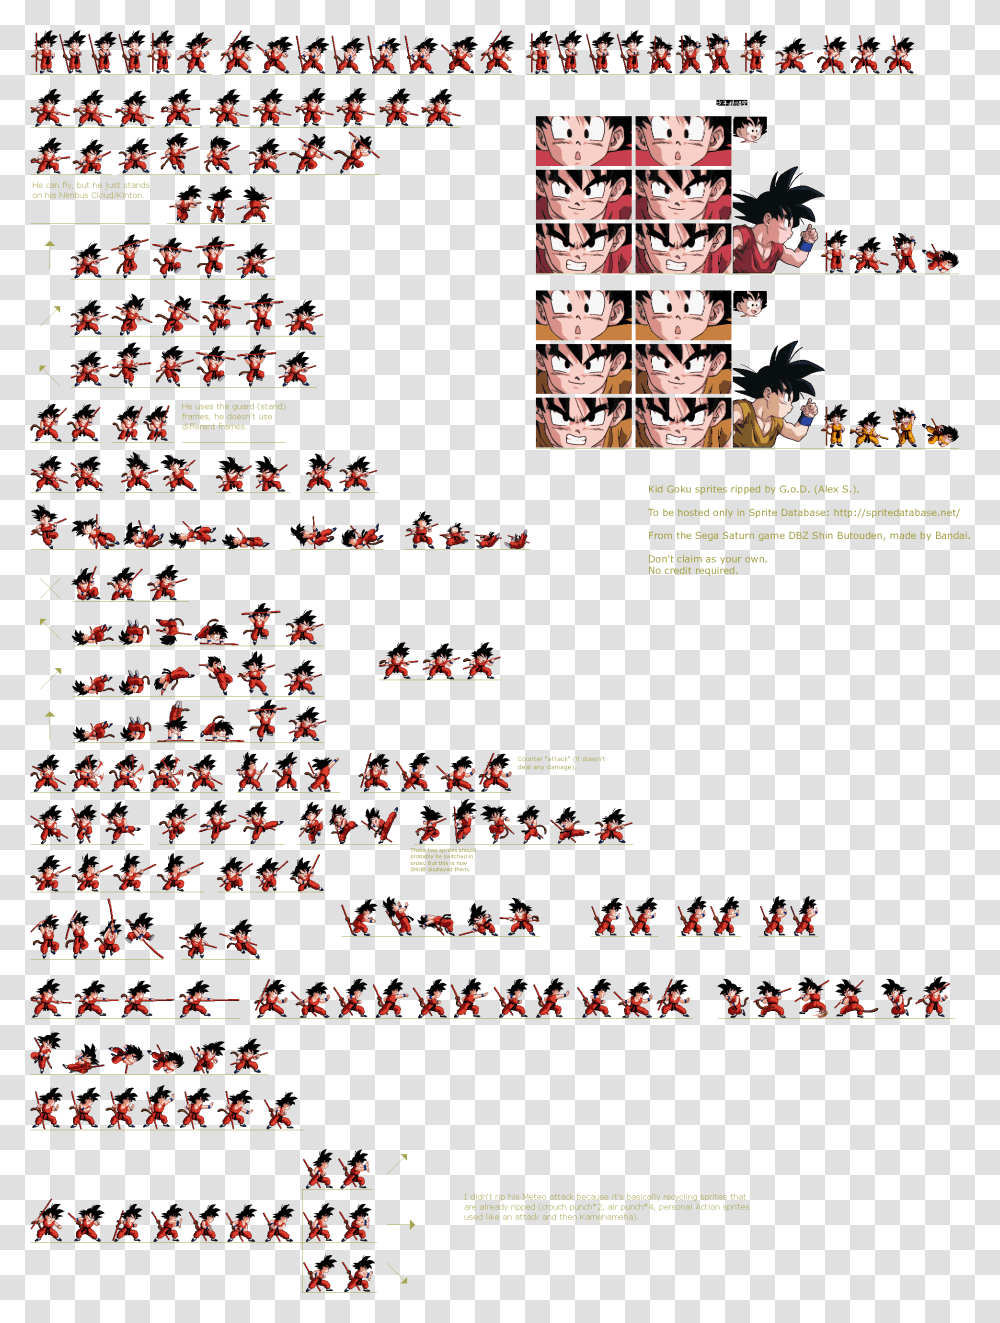 Mfg Shin Butouden Sprite Rips By God Dragon Ball Mugen Sprite Sheet, Text, Super Mario, Alphabet Transparent Png